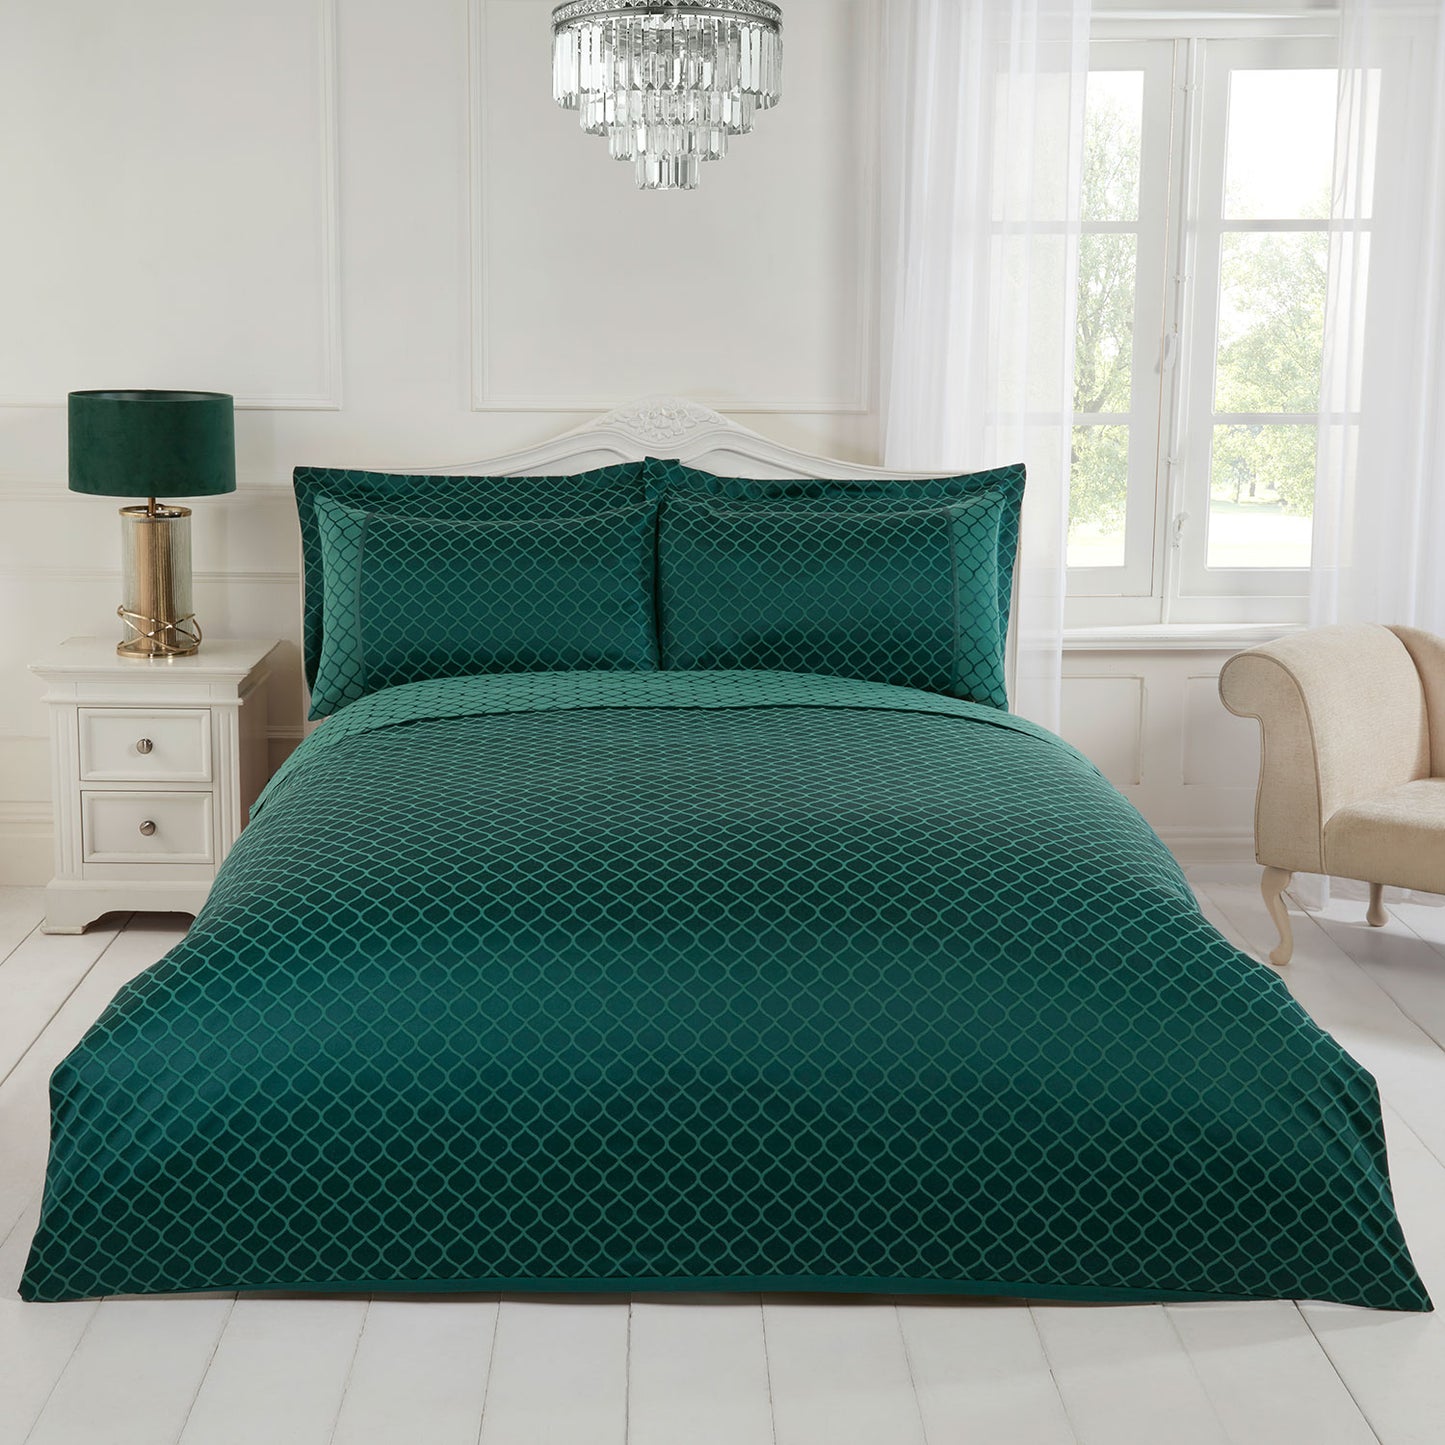 Othello Emerald Jacquard Housewife Pillowcases (Pair)